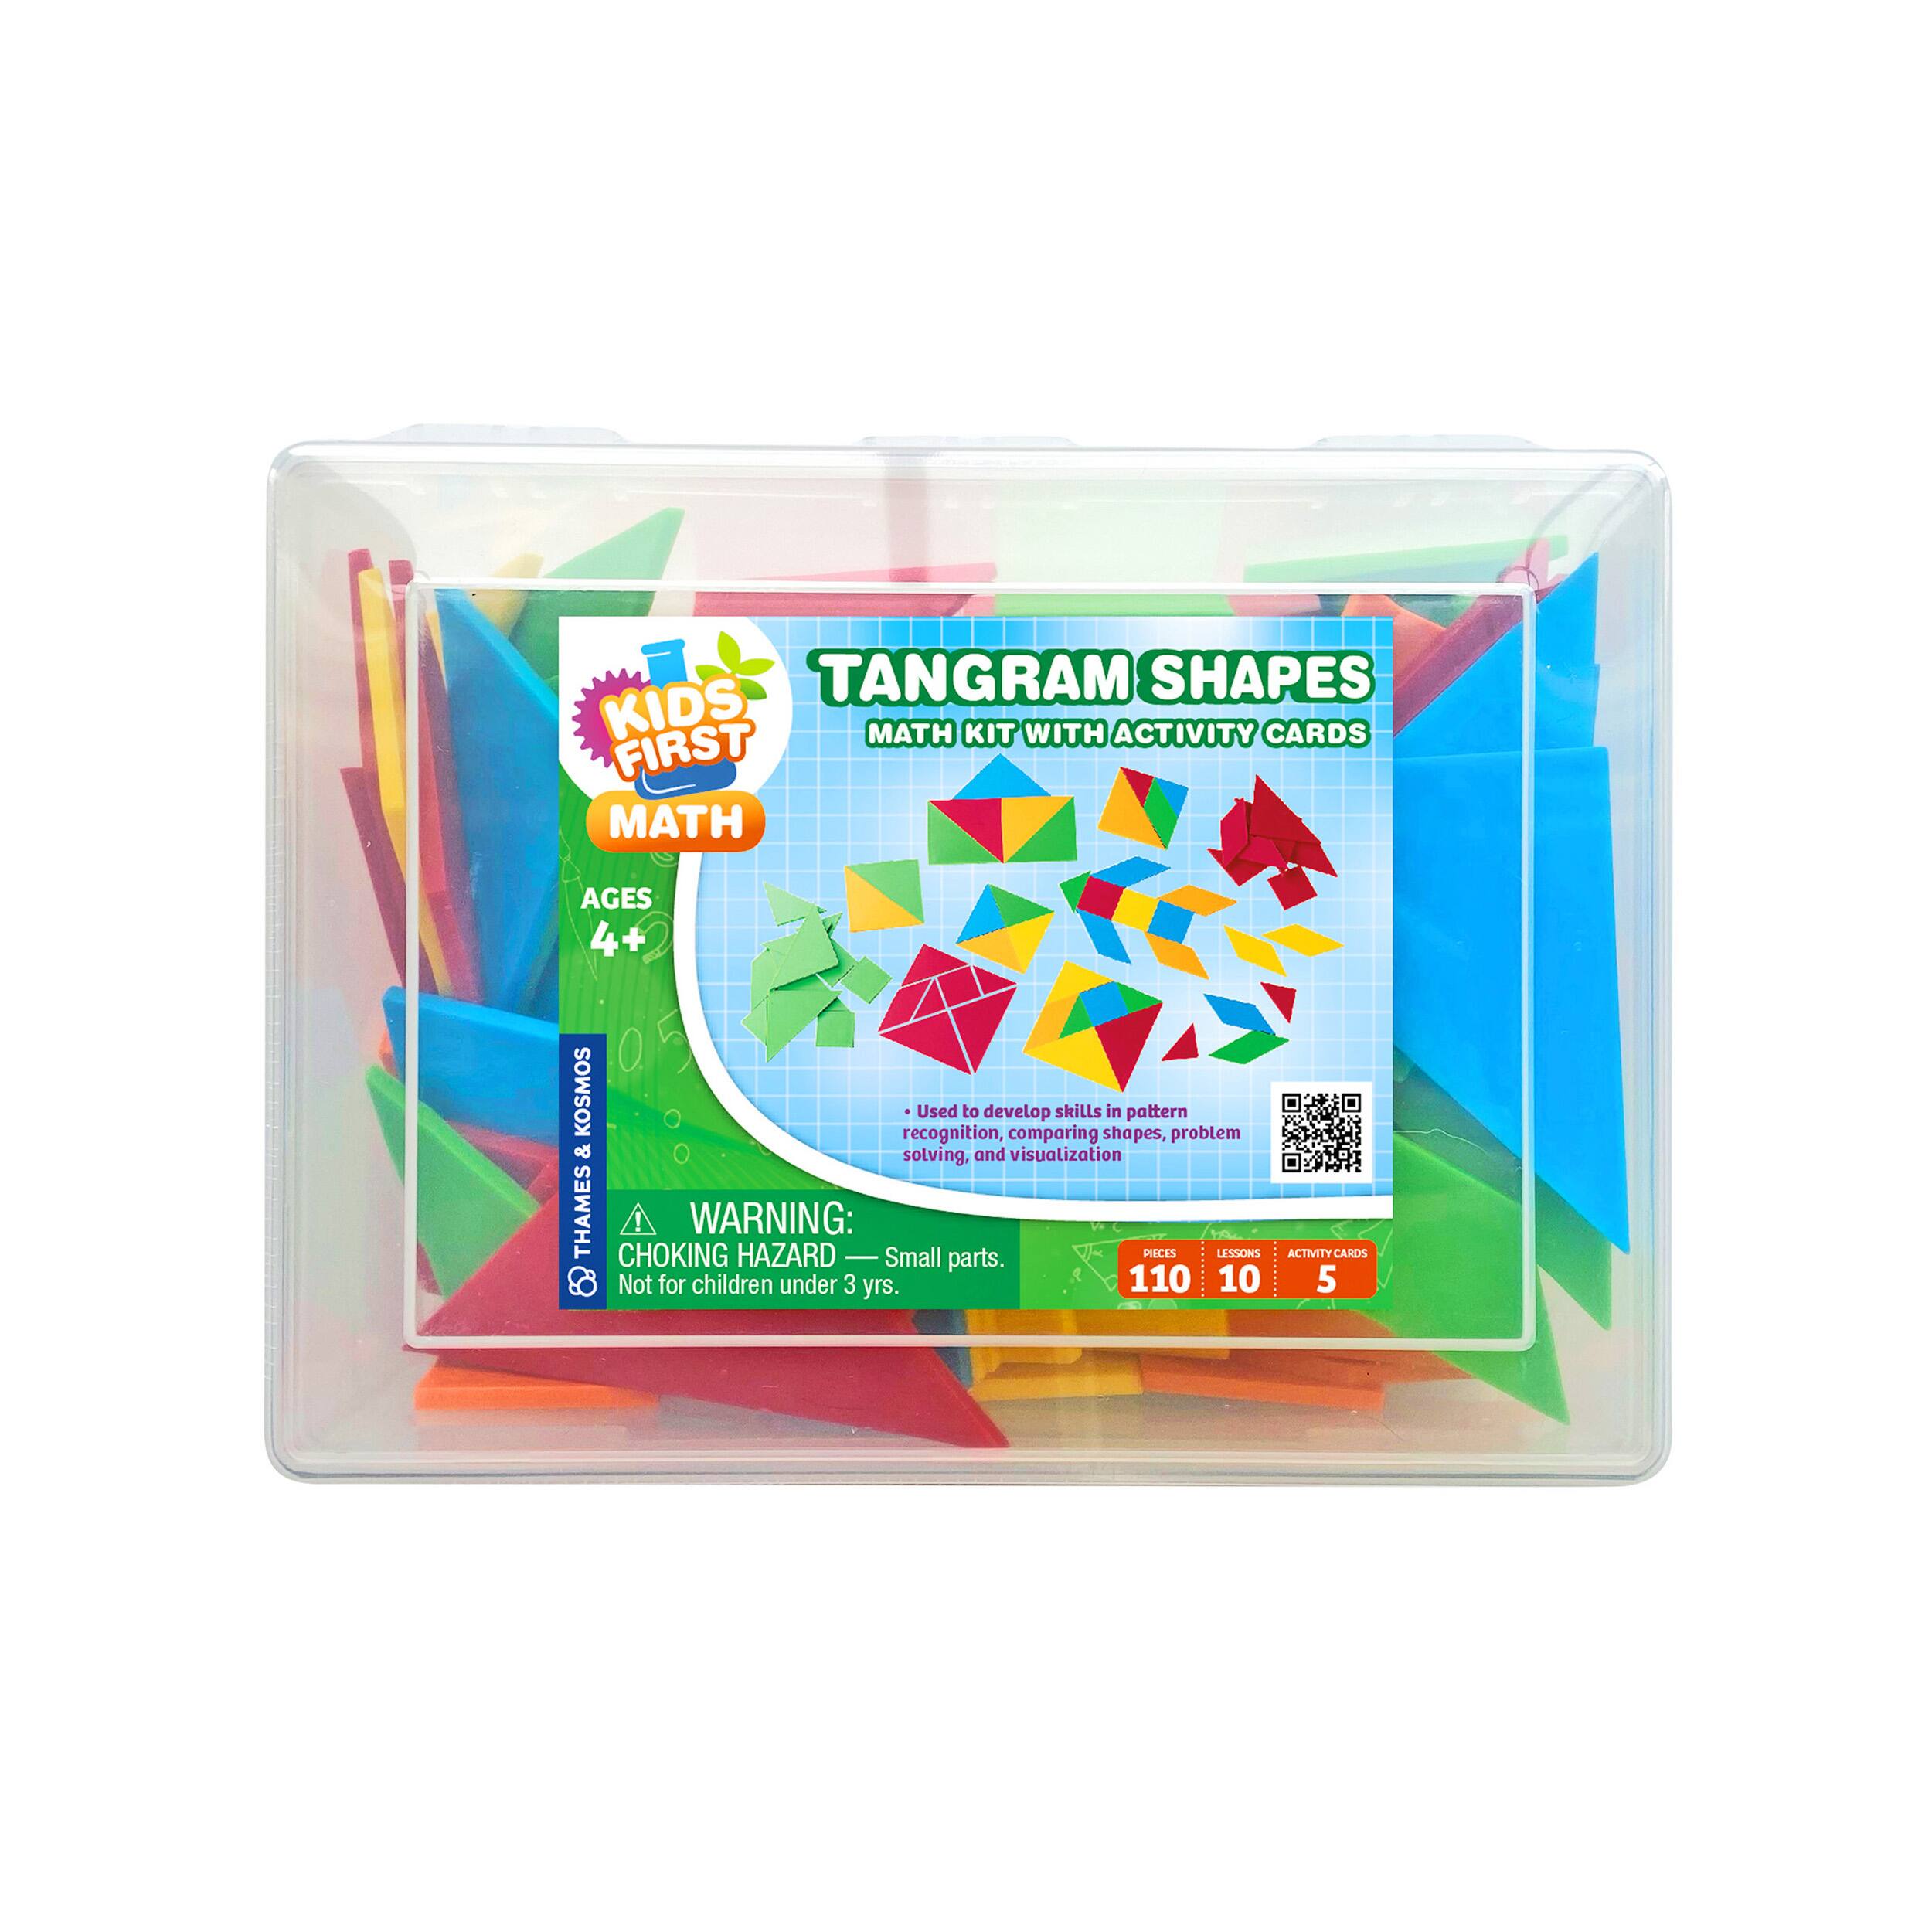 Thames &#x26; Kosmos Tangram Shapes Math Kit with Activity Cards